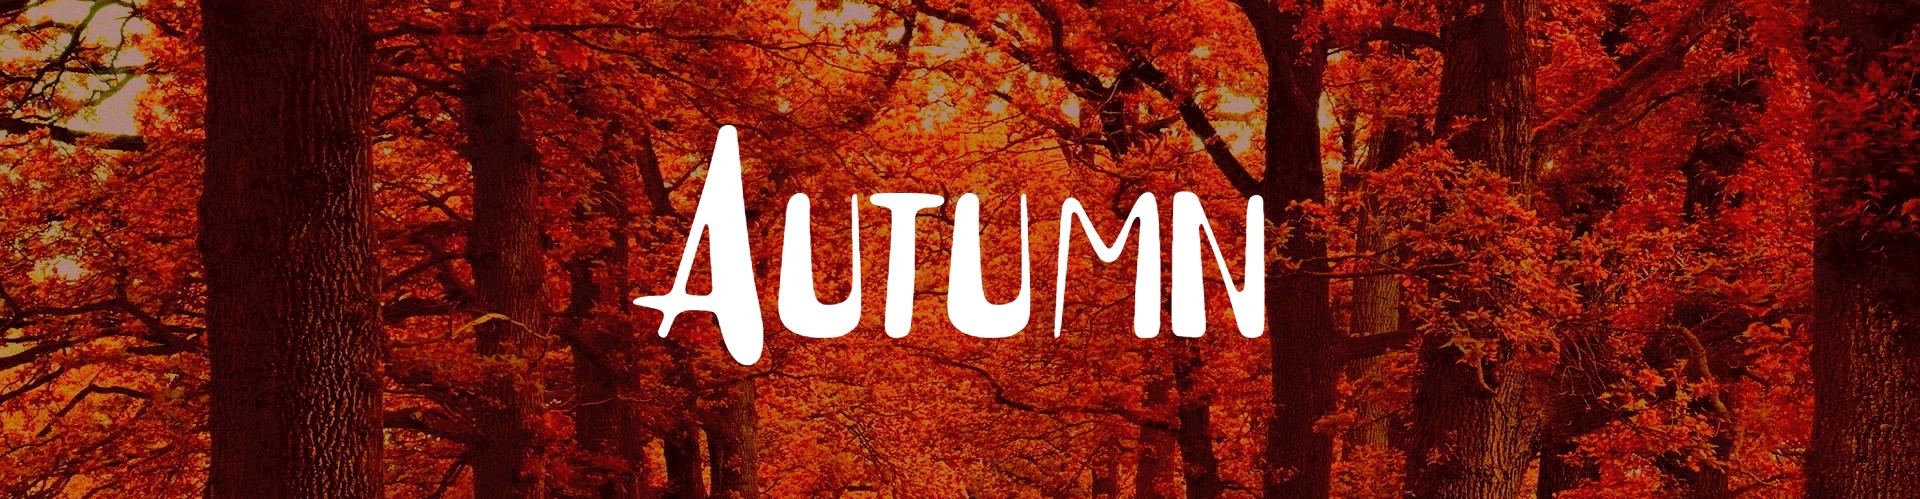 Autumn -spring edition-